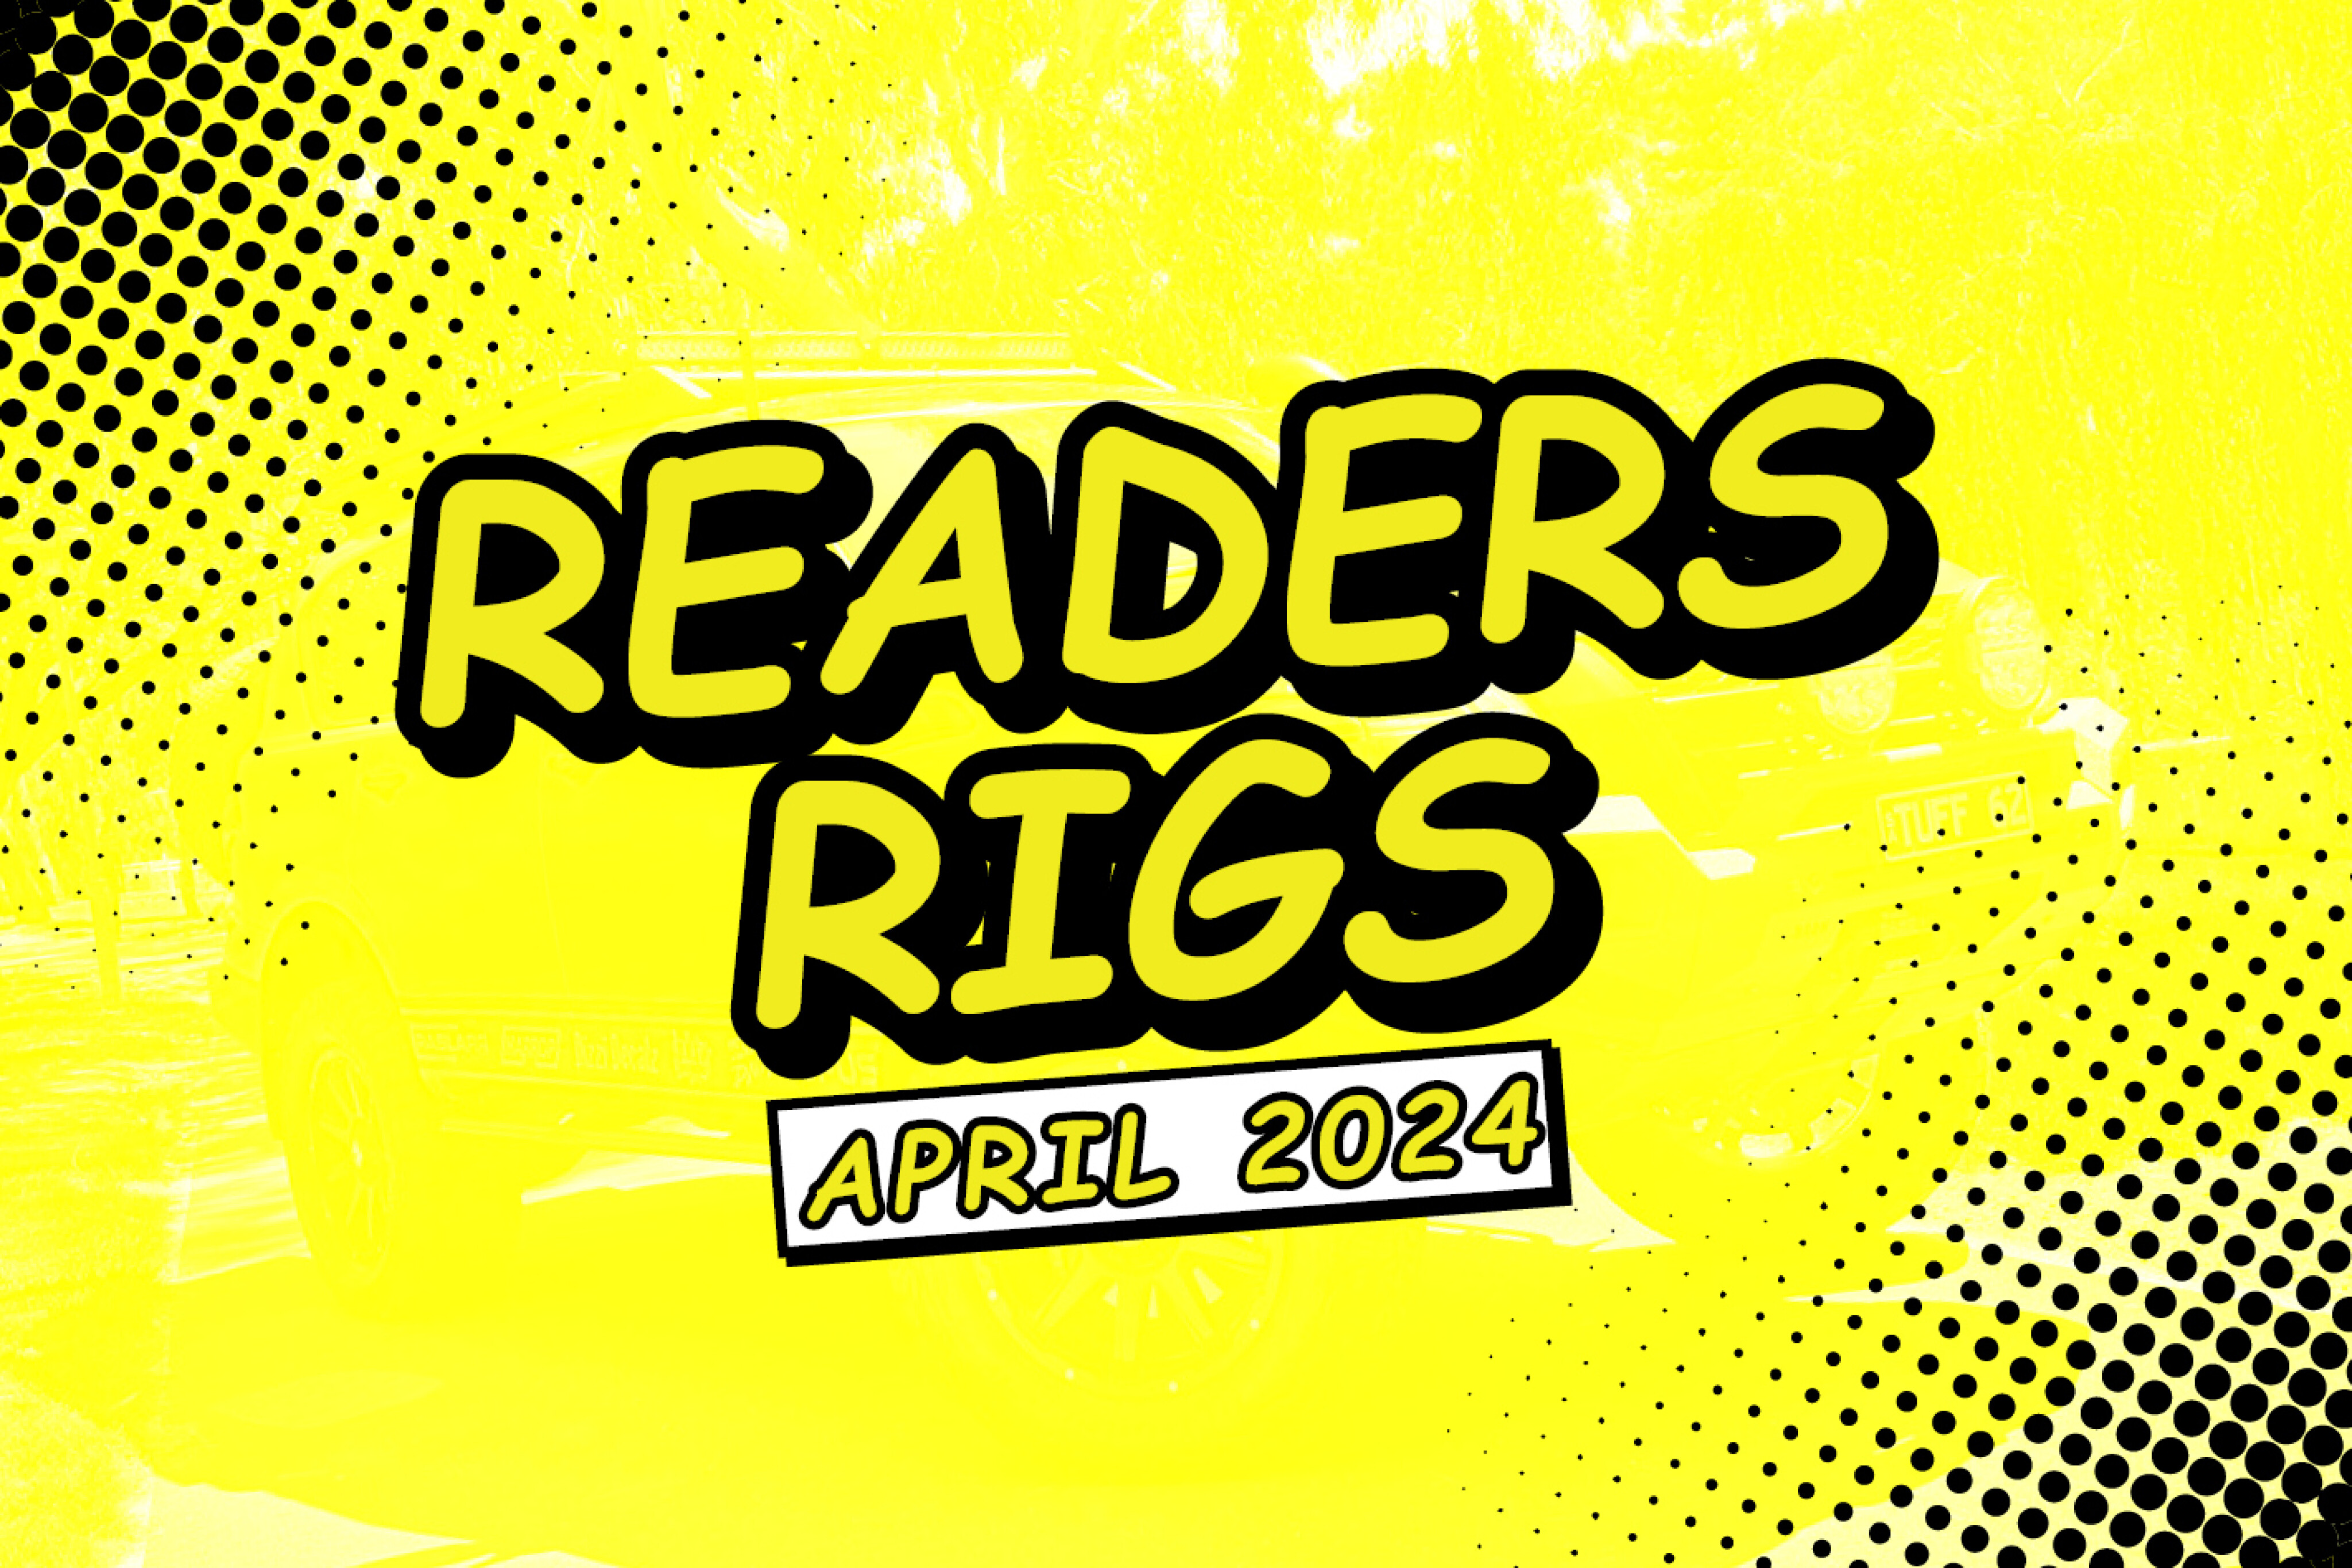 e86d10da/readers rigs april 2024 2 jpg